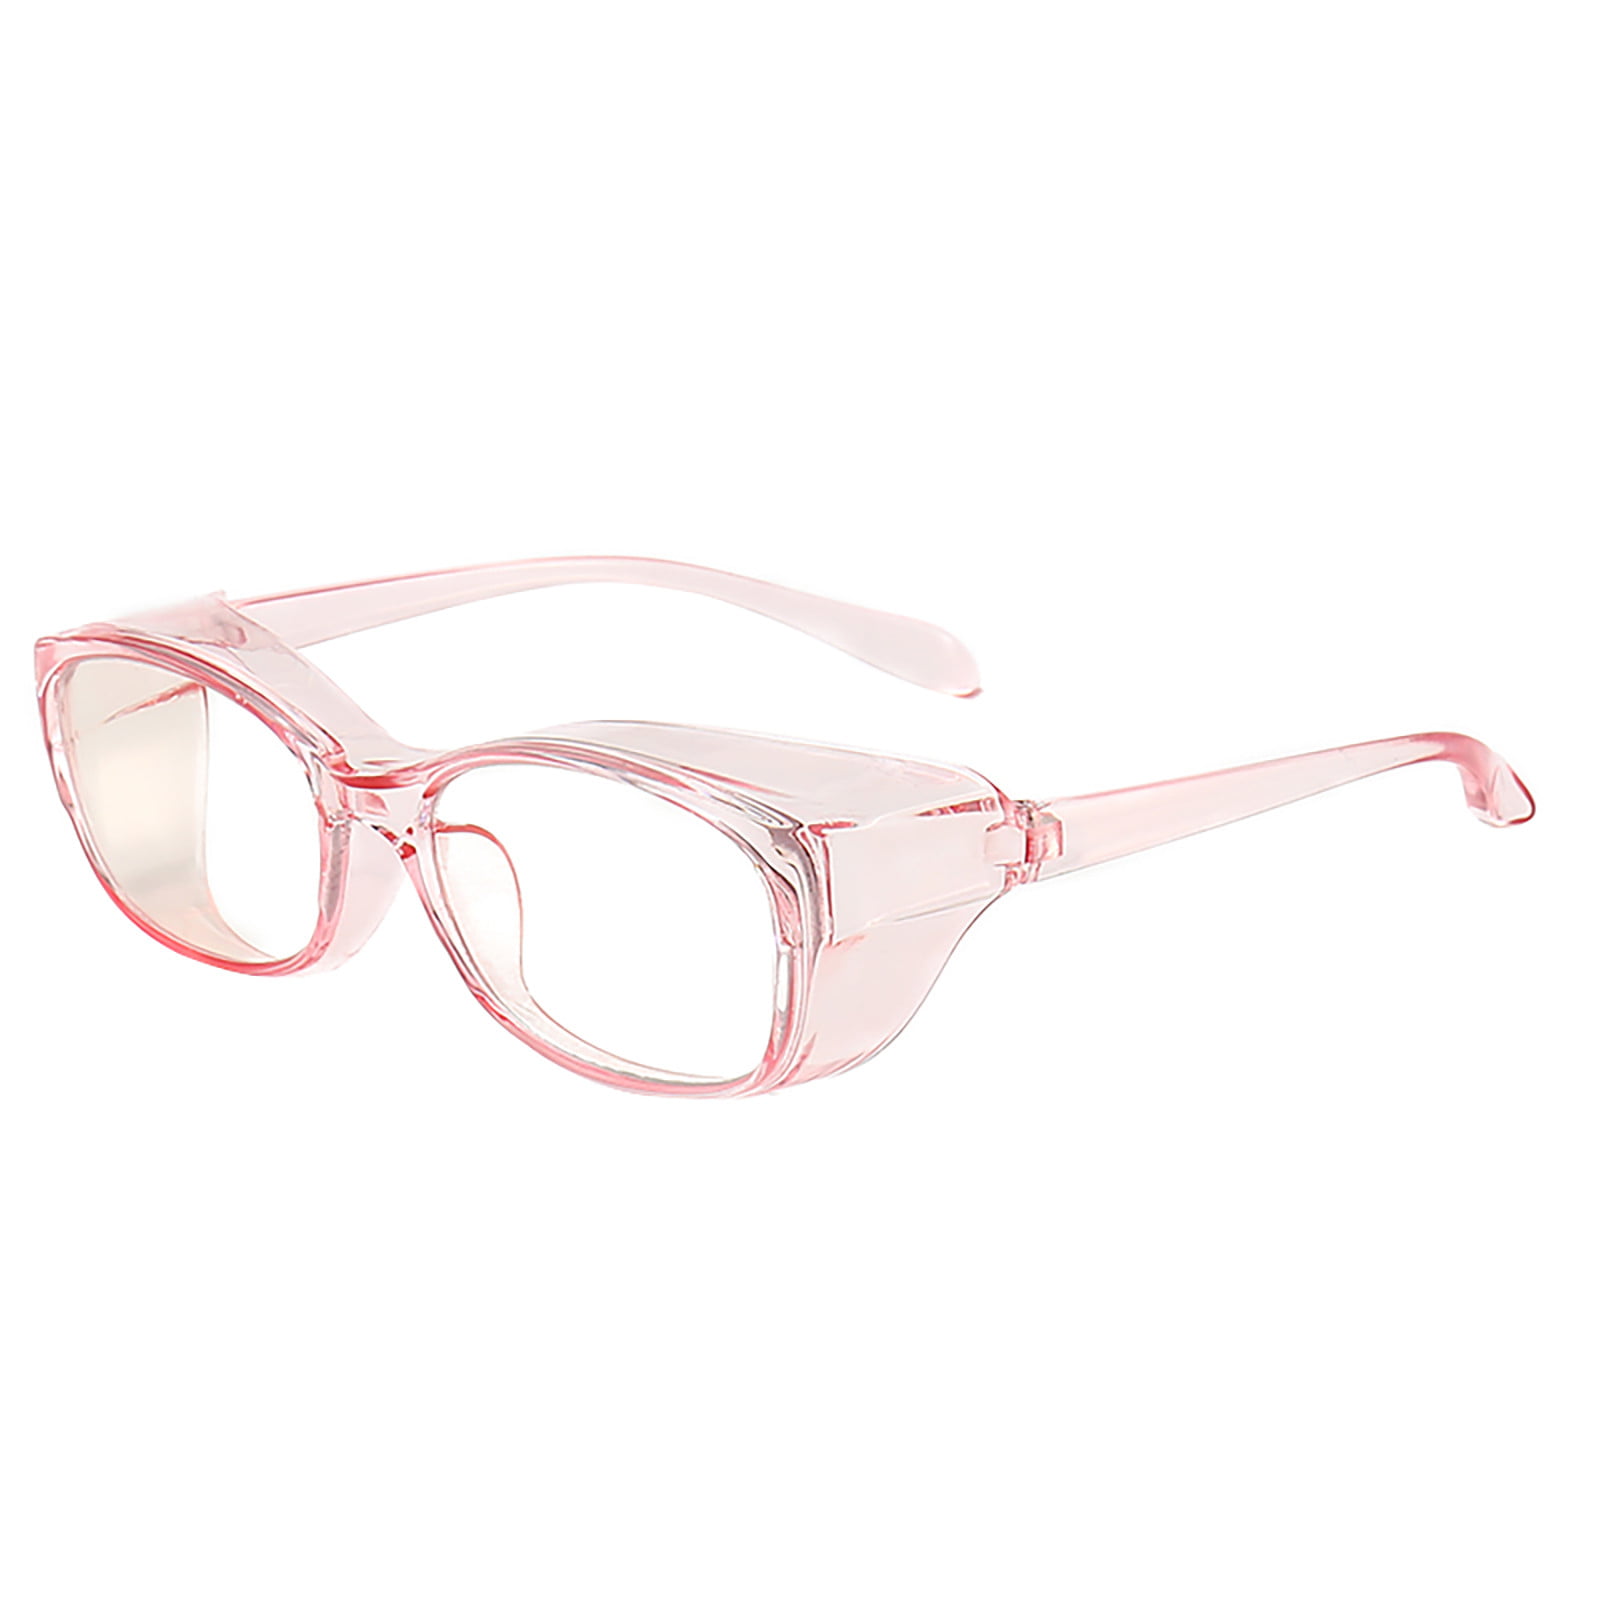 Unisex Anti Fog Safety Goggles Blue Light Blocking Glasses Eye Protection With Side Shields Safety Eyeglasses